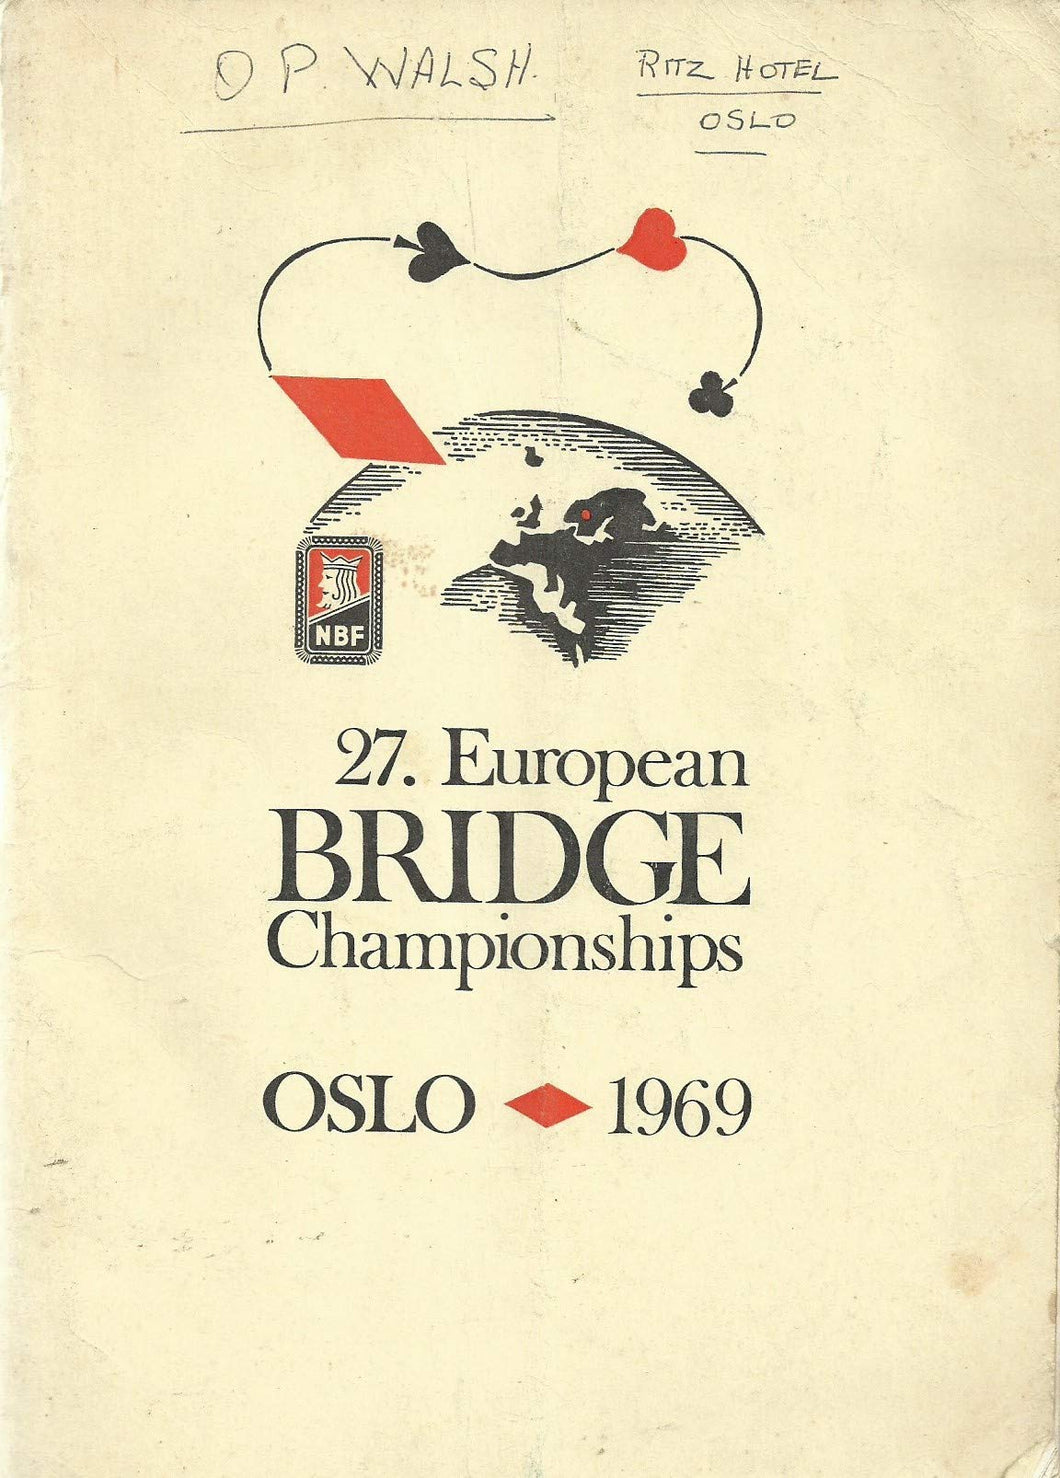 27th European Bridge Championships - Oslo, 1969